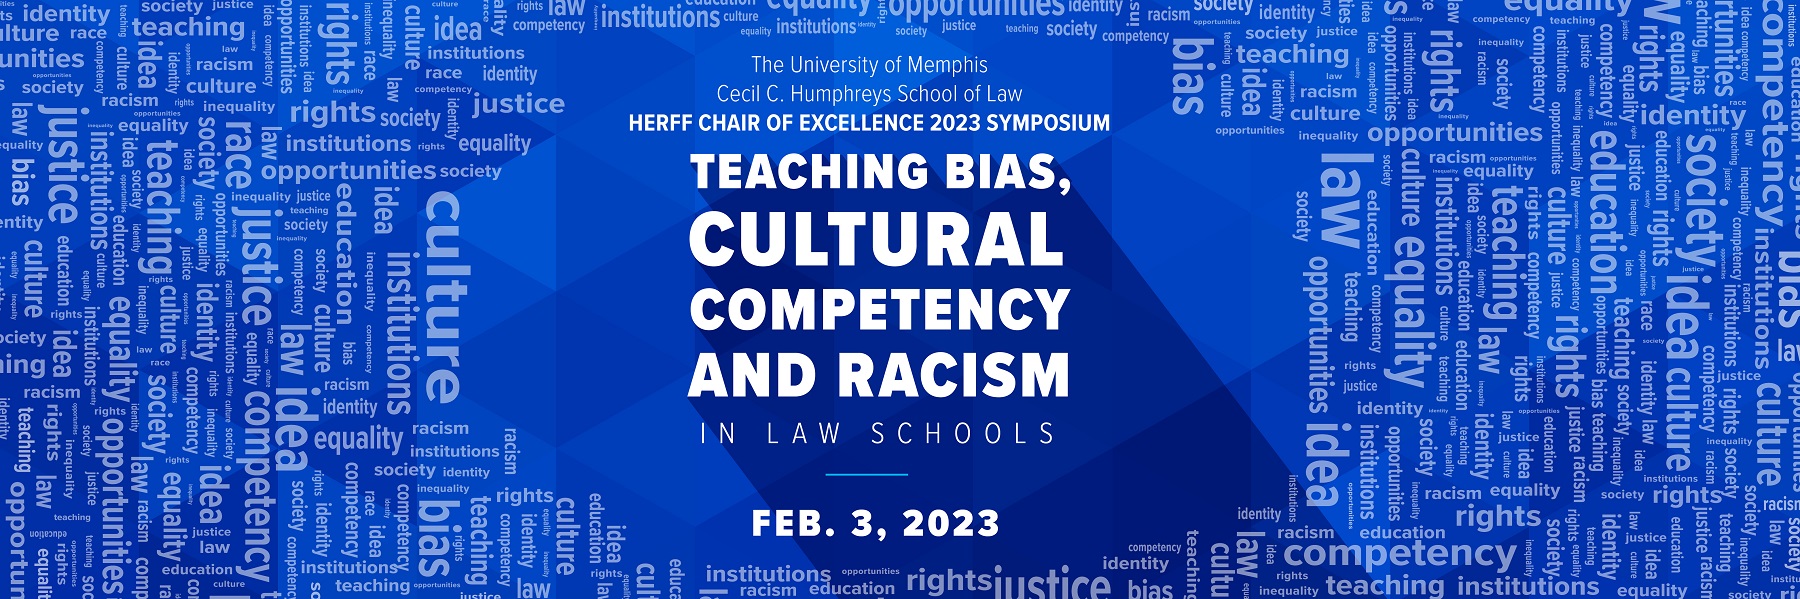 herff2023 symposium banner